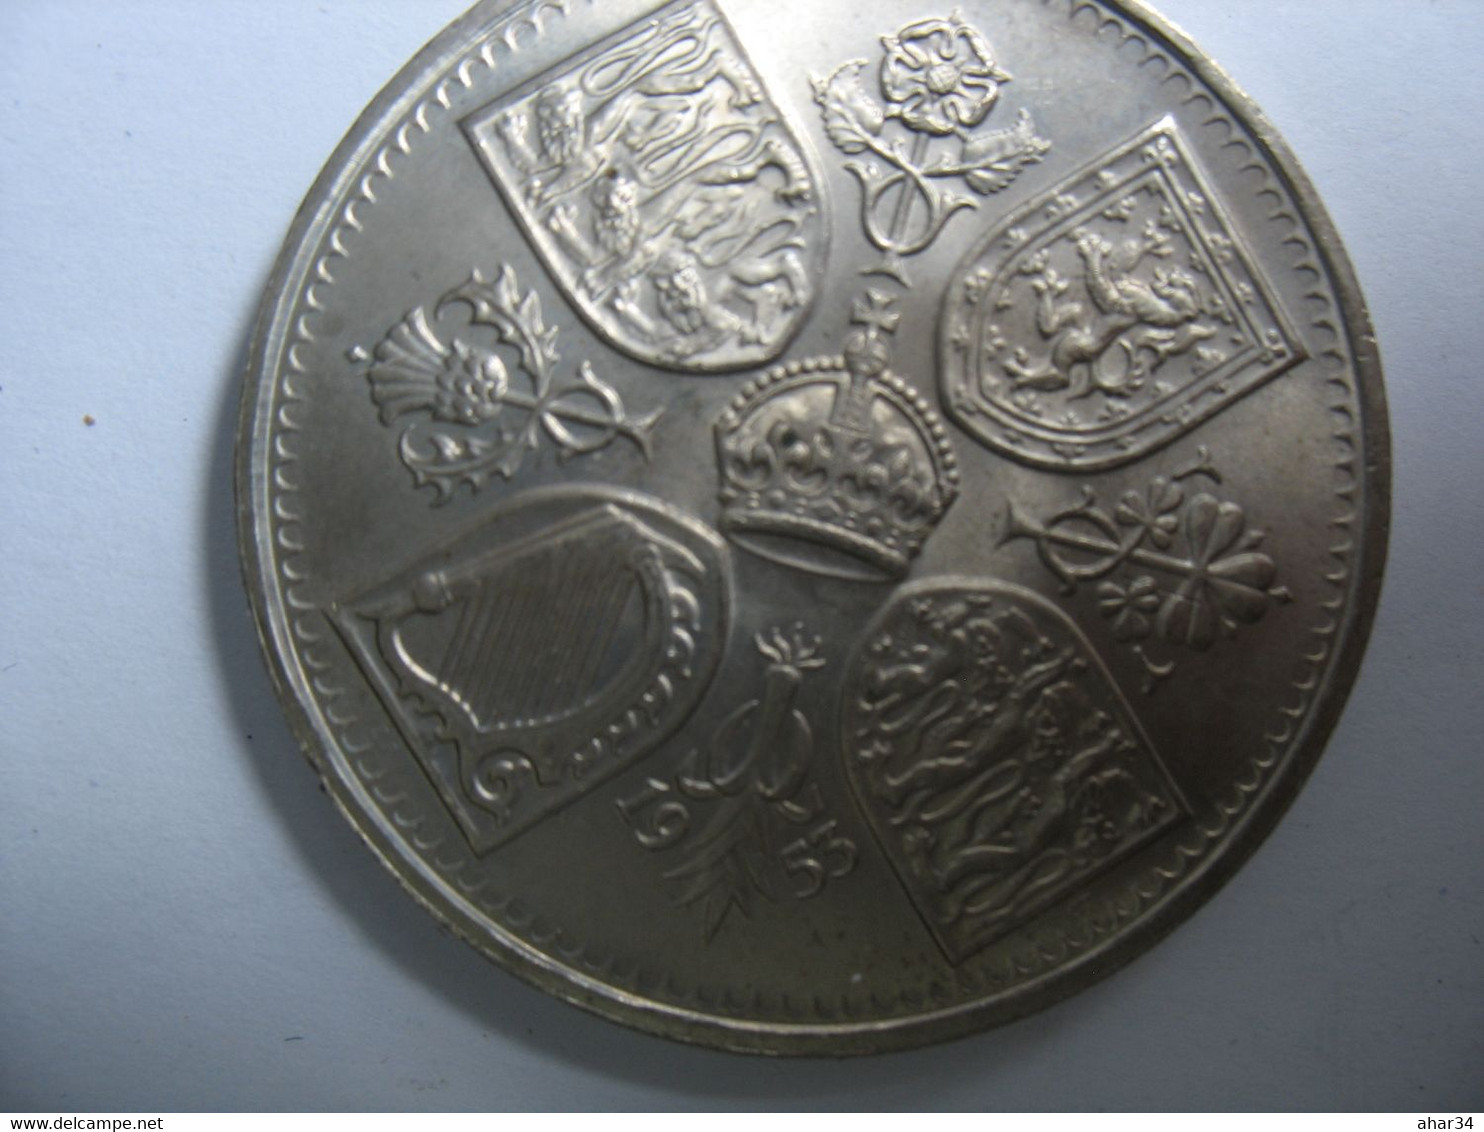 1953 Elizabeth II Coronation Crown Coin 5 shilling lot of 4 coins . lot41 N 18